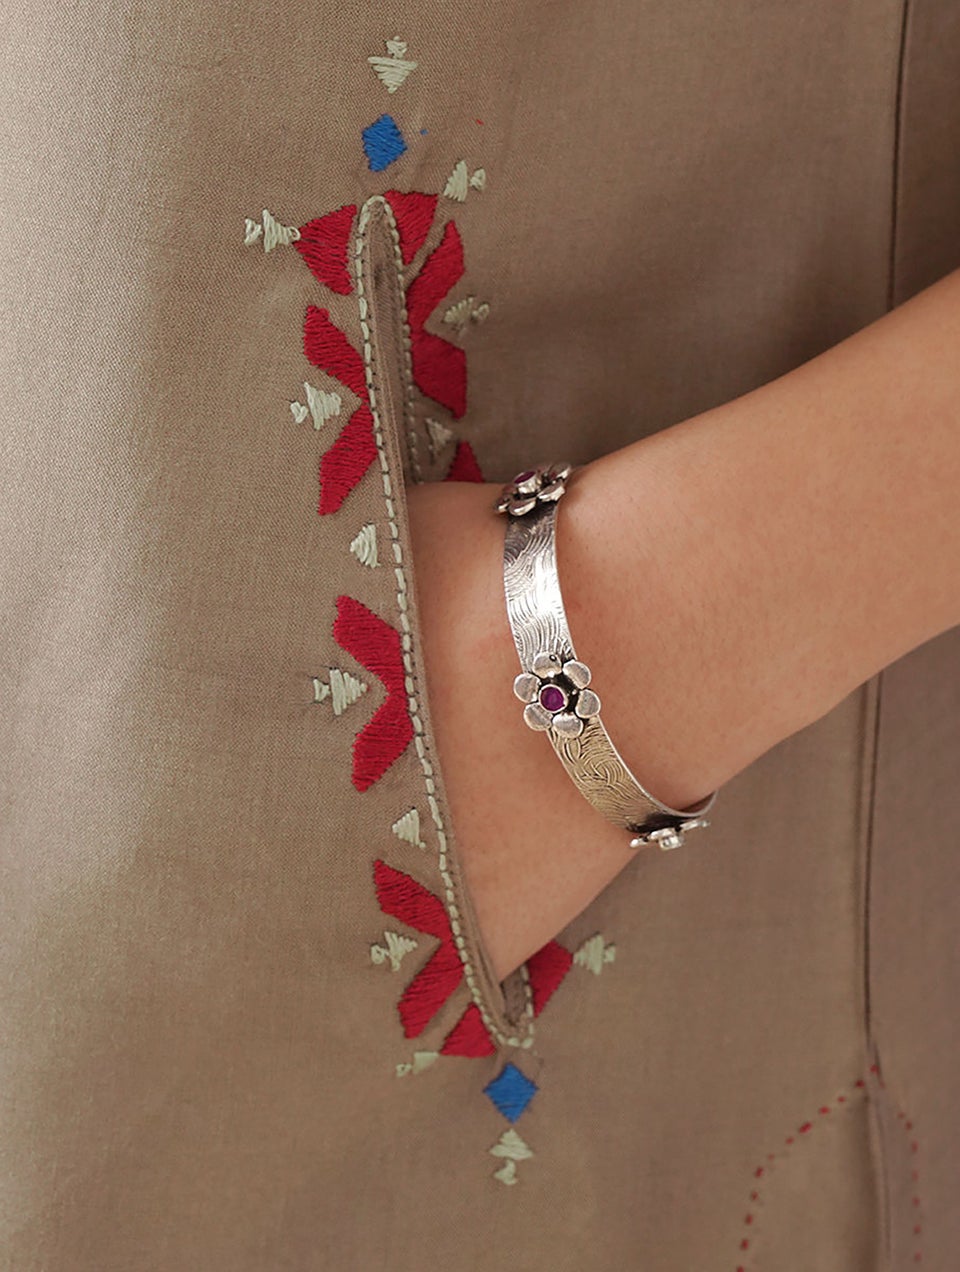 Women Beige Embroidered Silk Viscose Kurta With Pockets - XS